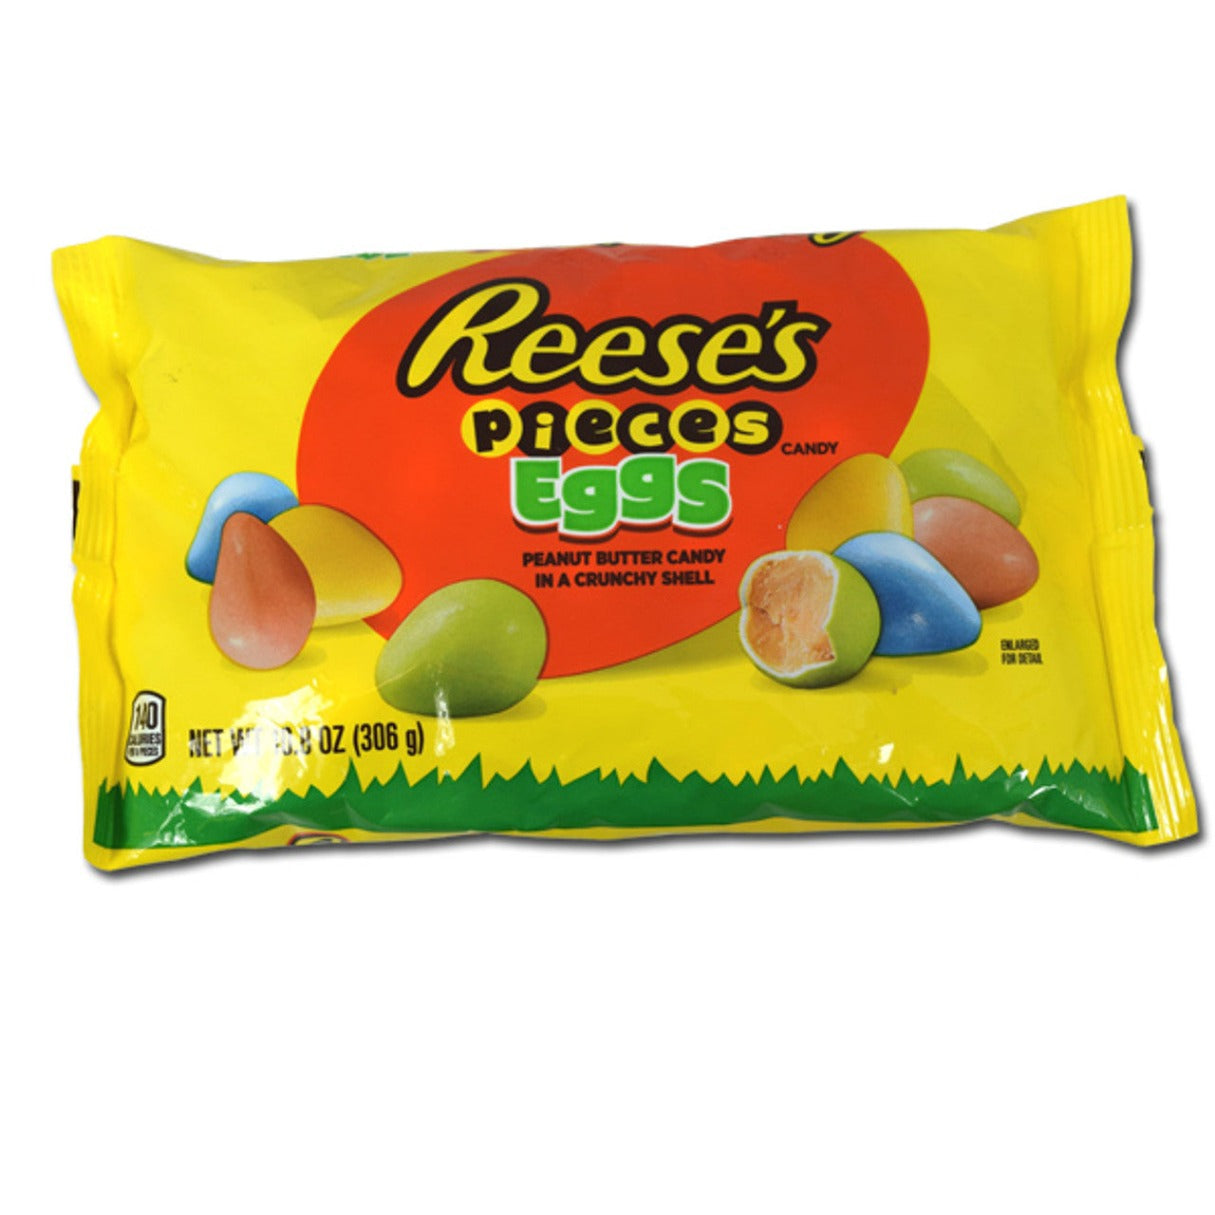 Reese's Pieces Eggs 10.8oz - 12ct